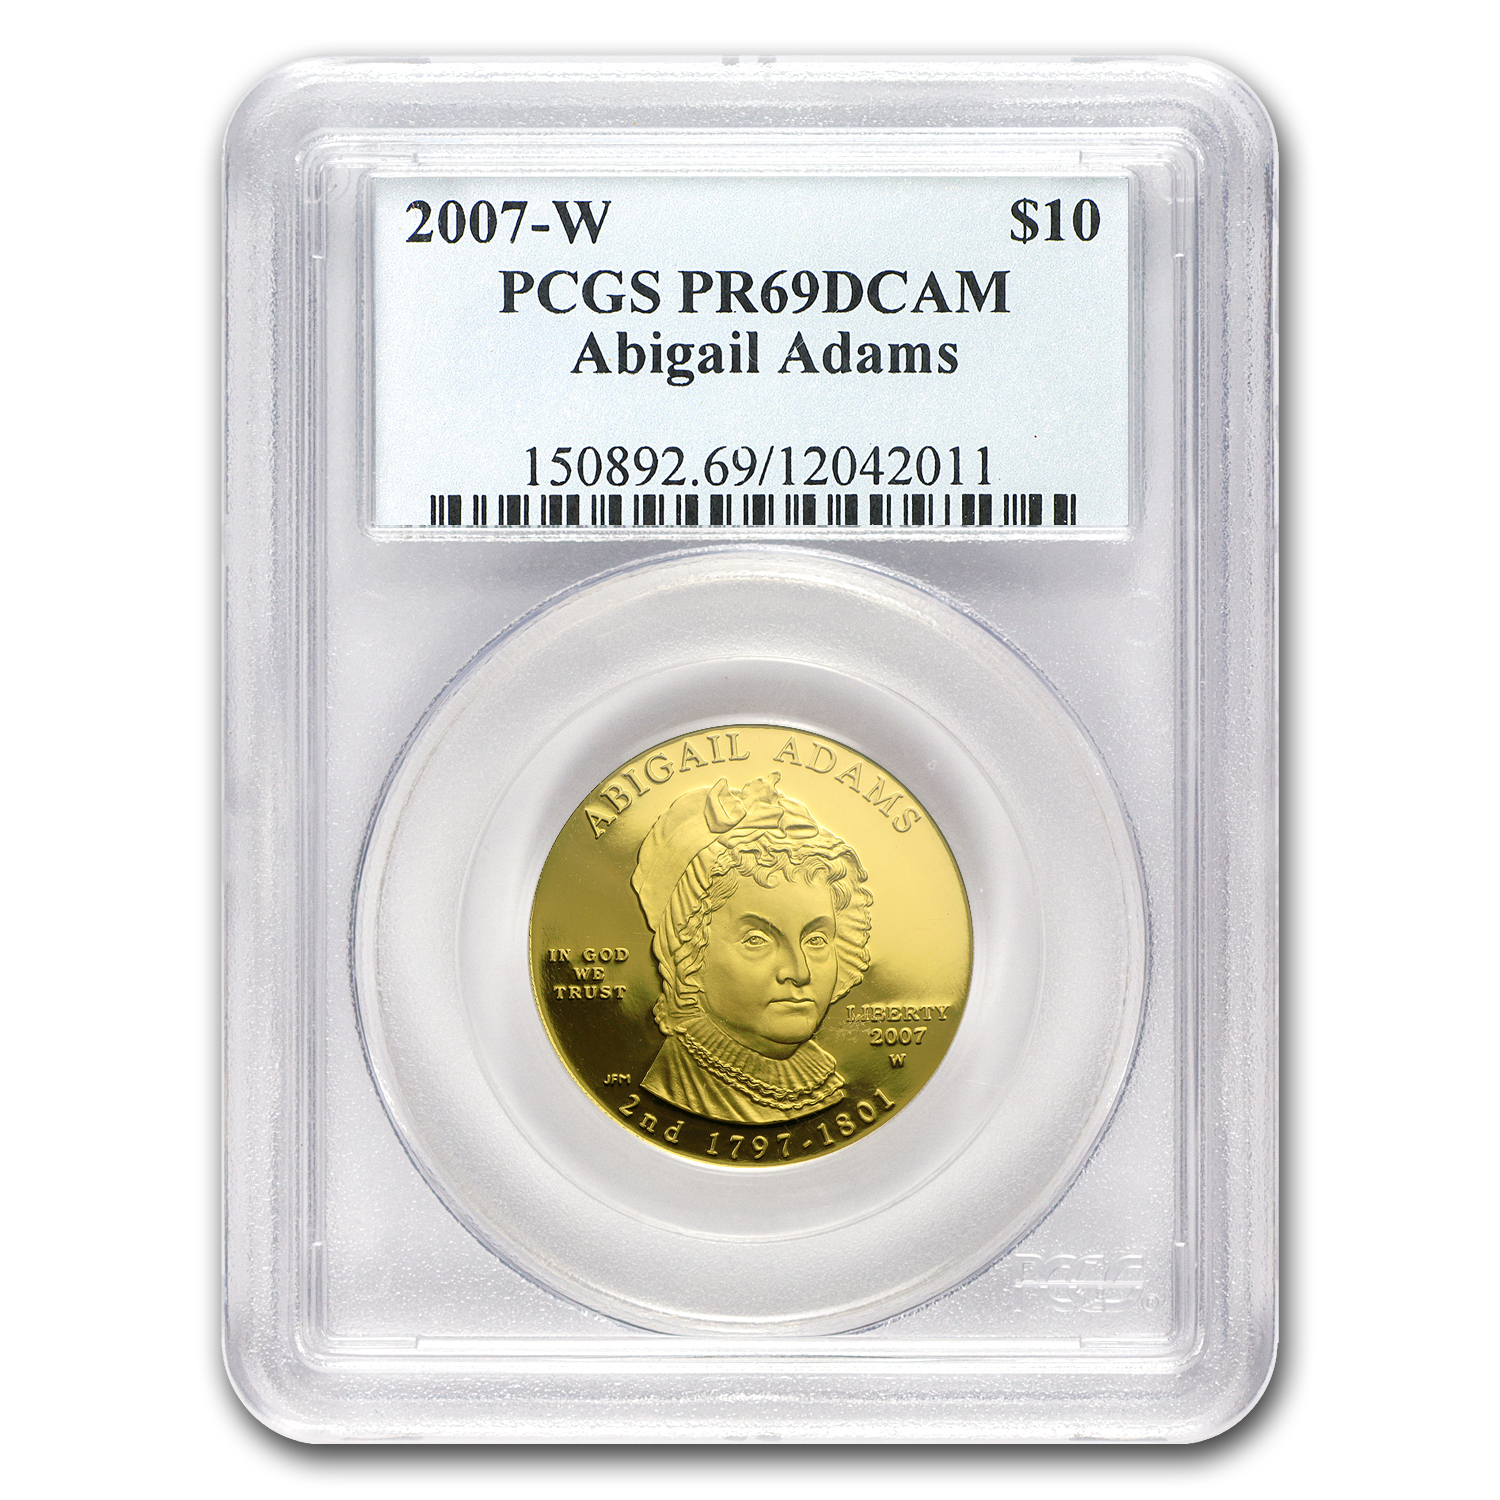 Buy 2007-W 1/2 oz Proof Gold Abigail Adams PR-69 PCGS